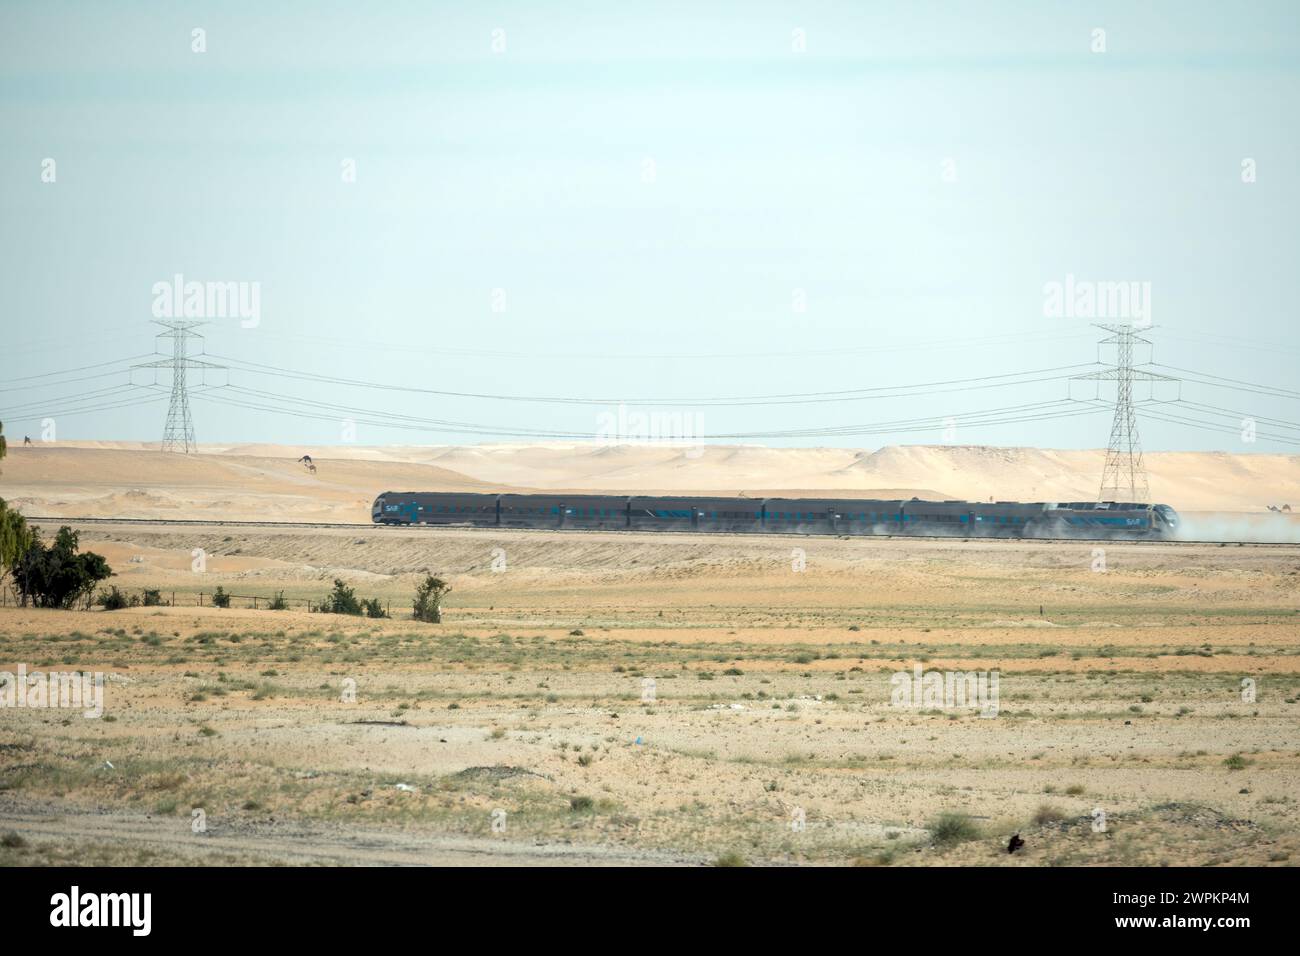 Saudi train in desert going Riyadh to Dammam Stock Photo